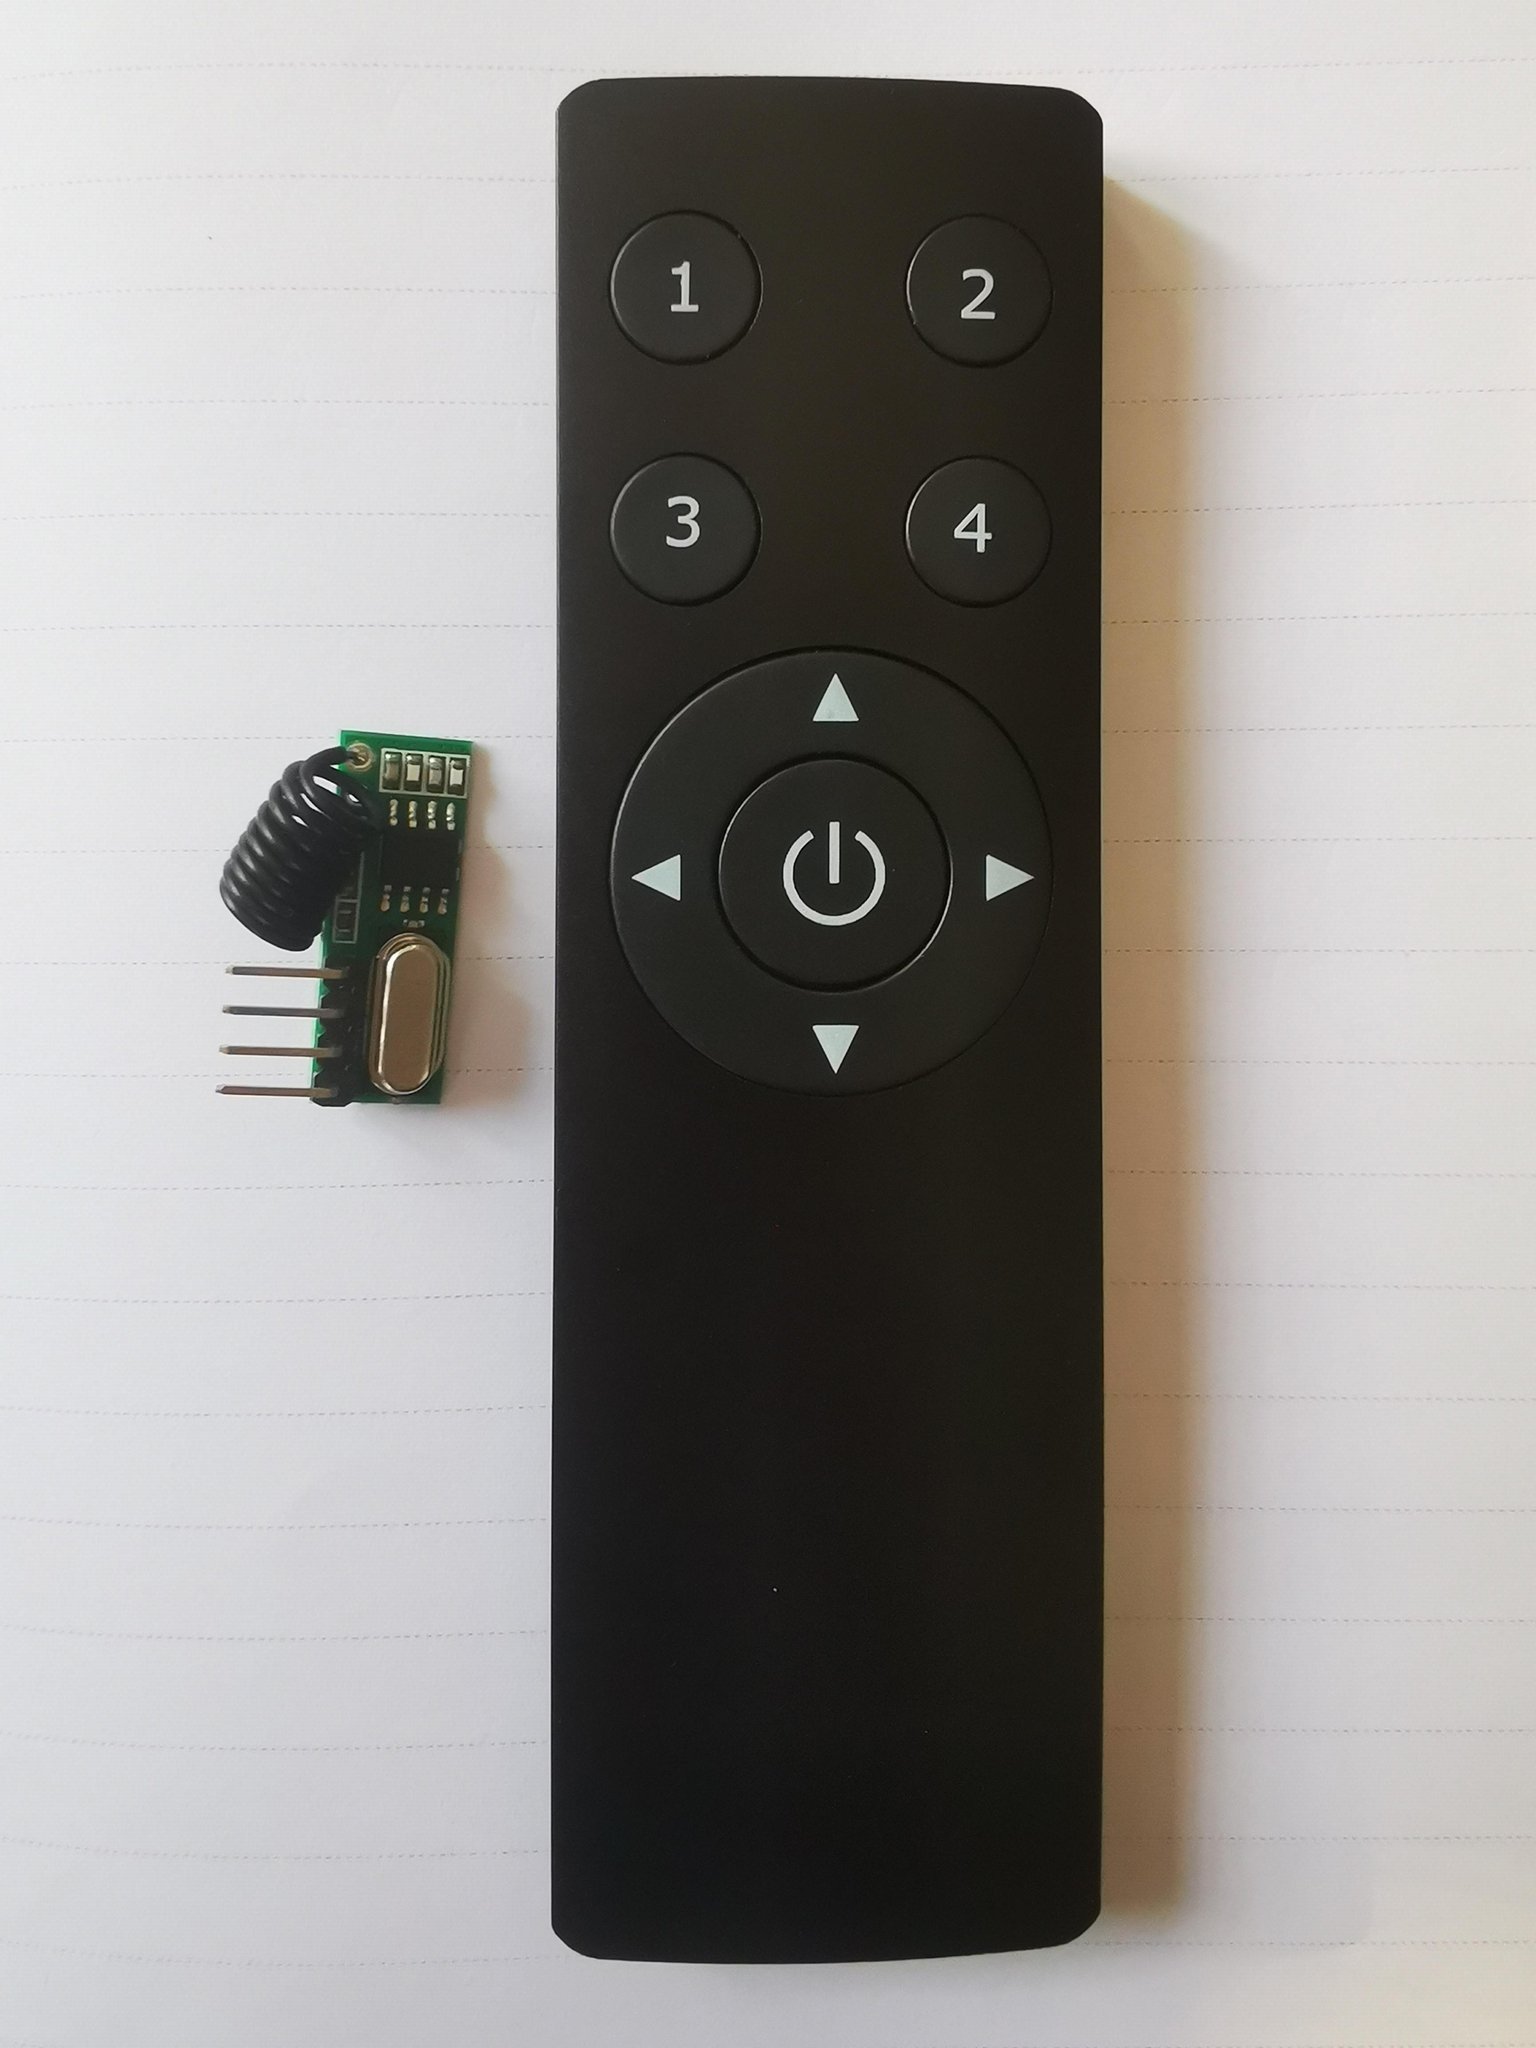 RF433 remote control smart RF transmitter remote curtain  2